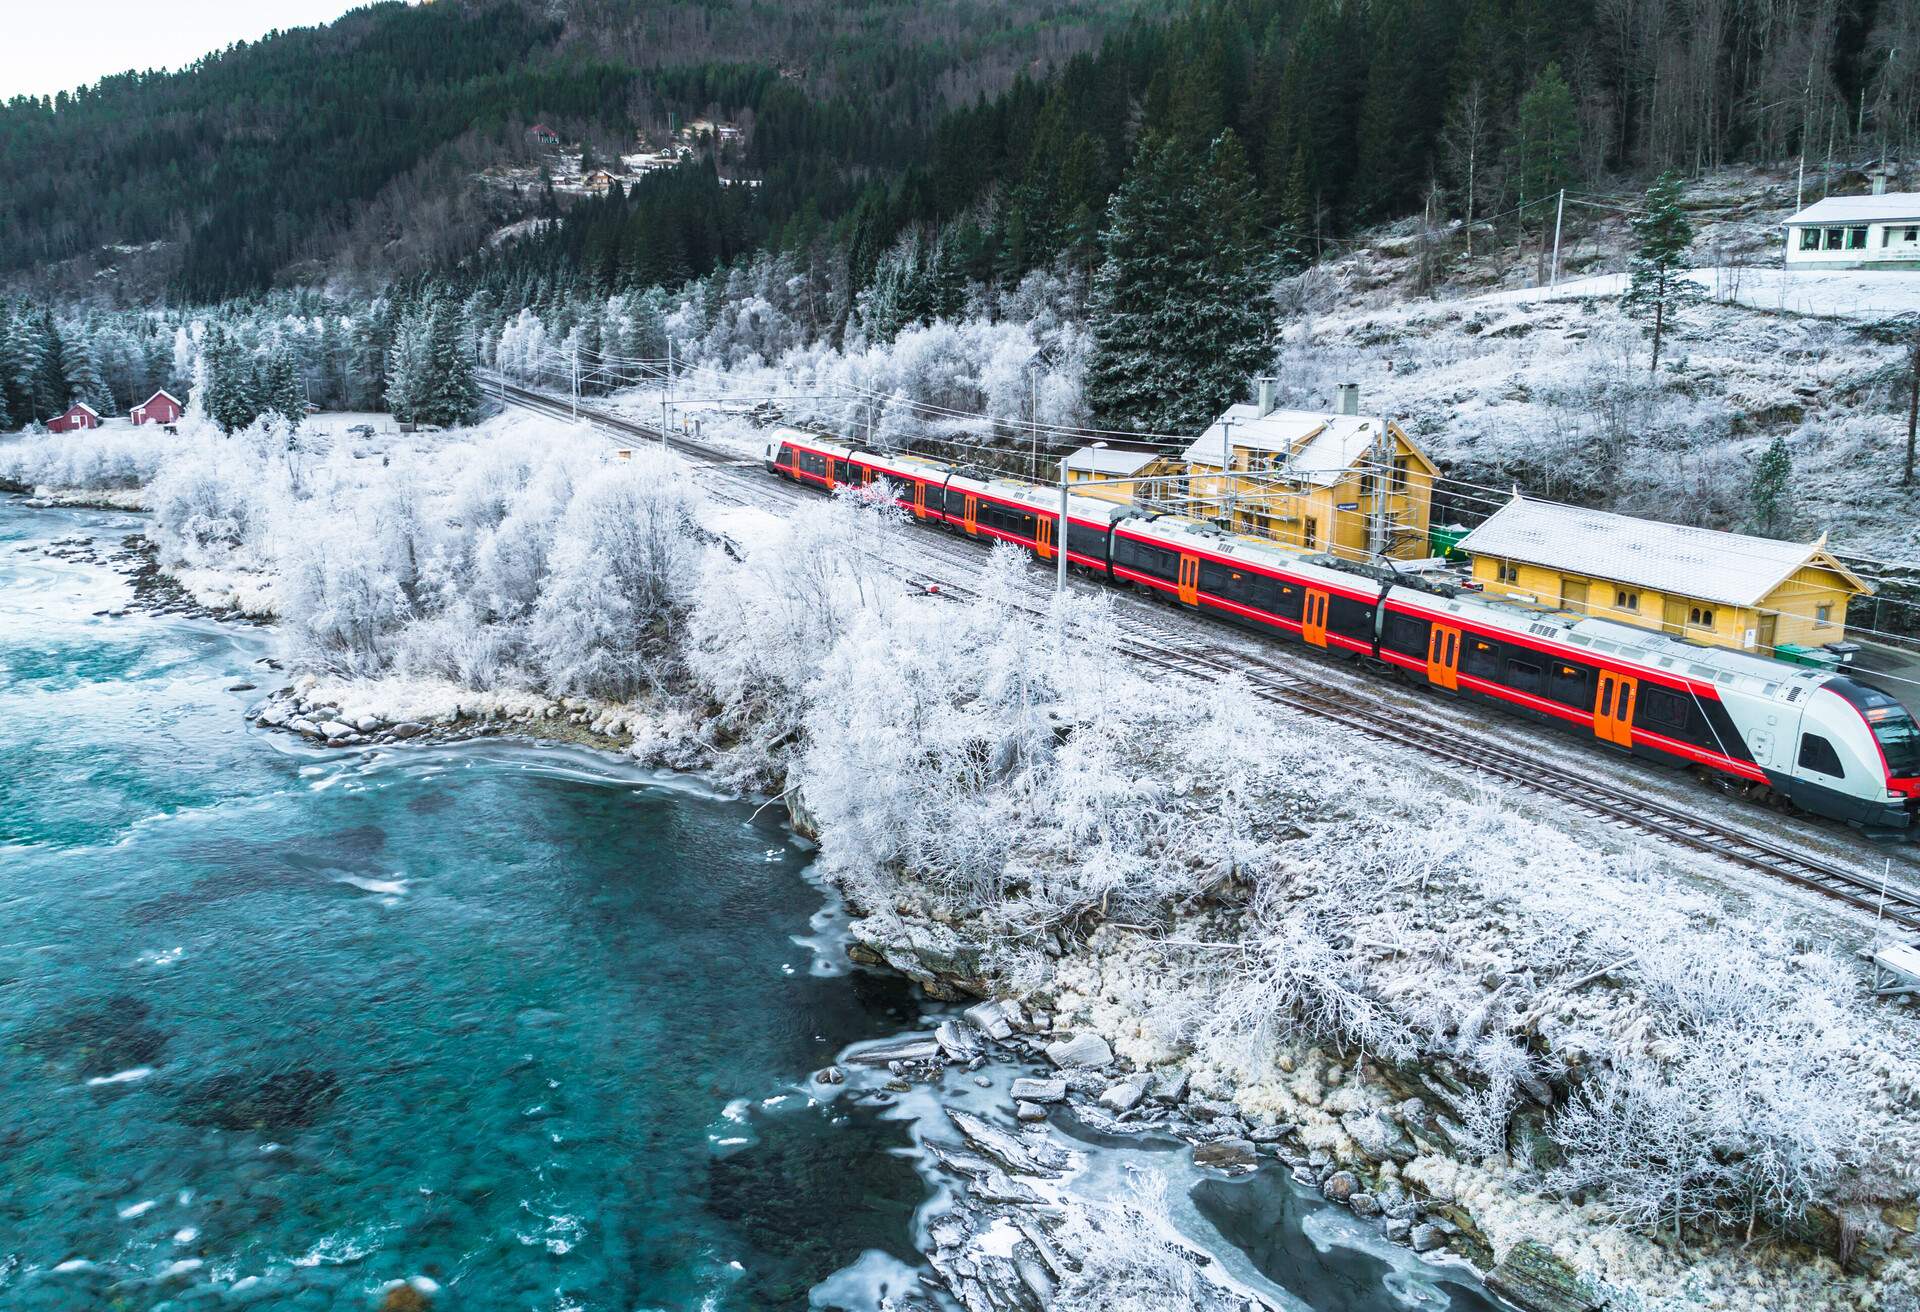 Train Oslo - Bergen in mountains. Hordaland, Norway.